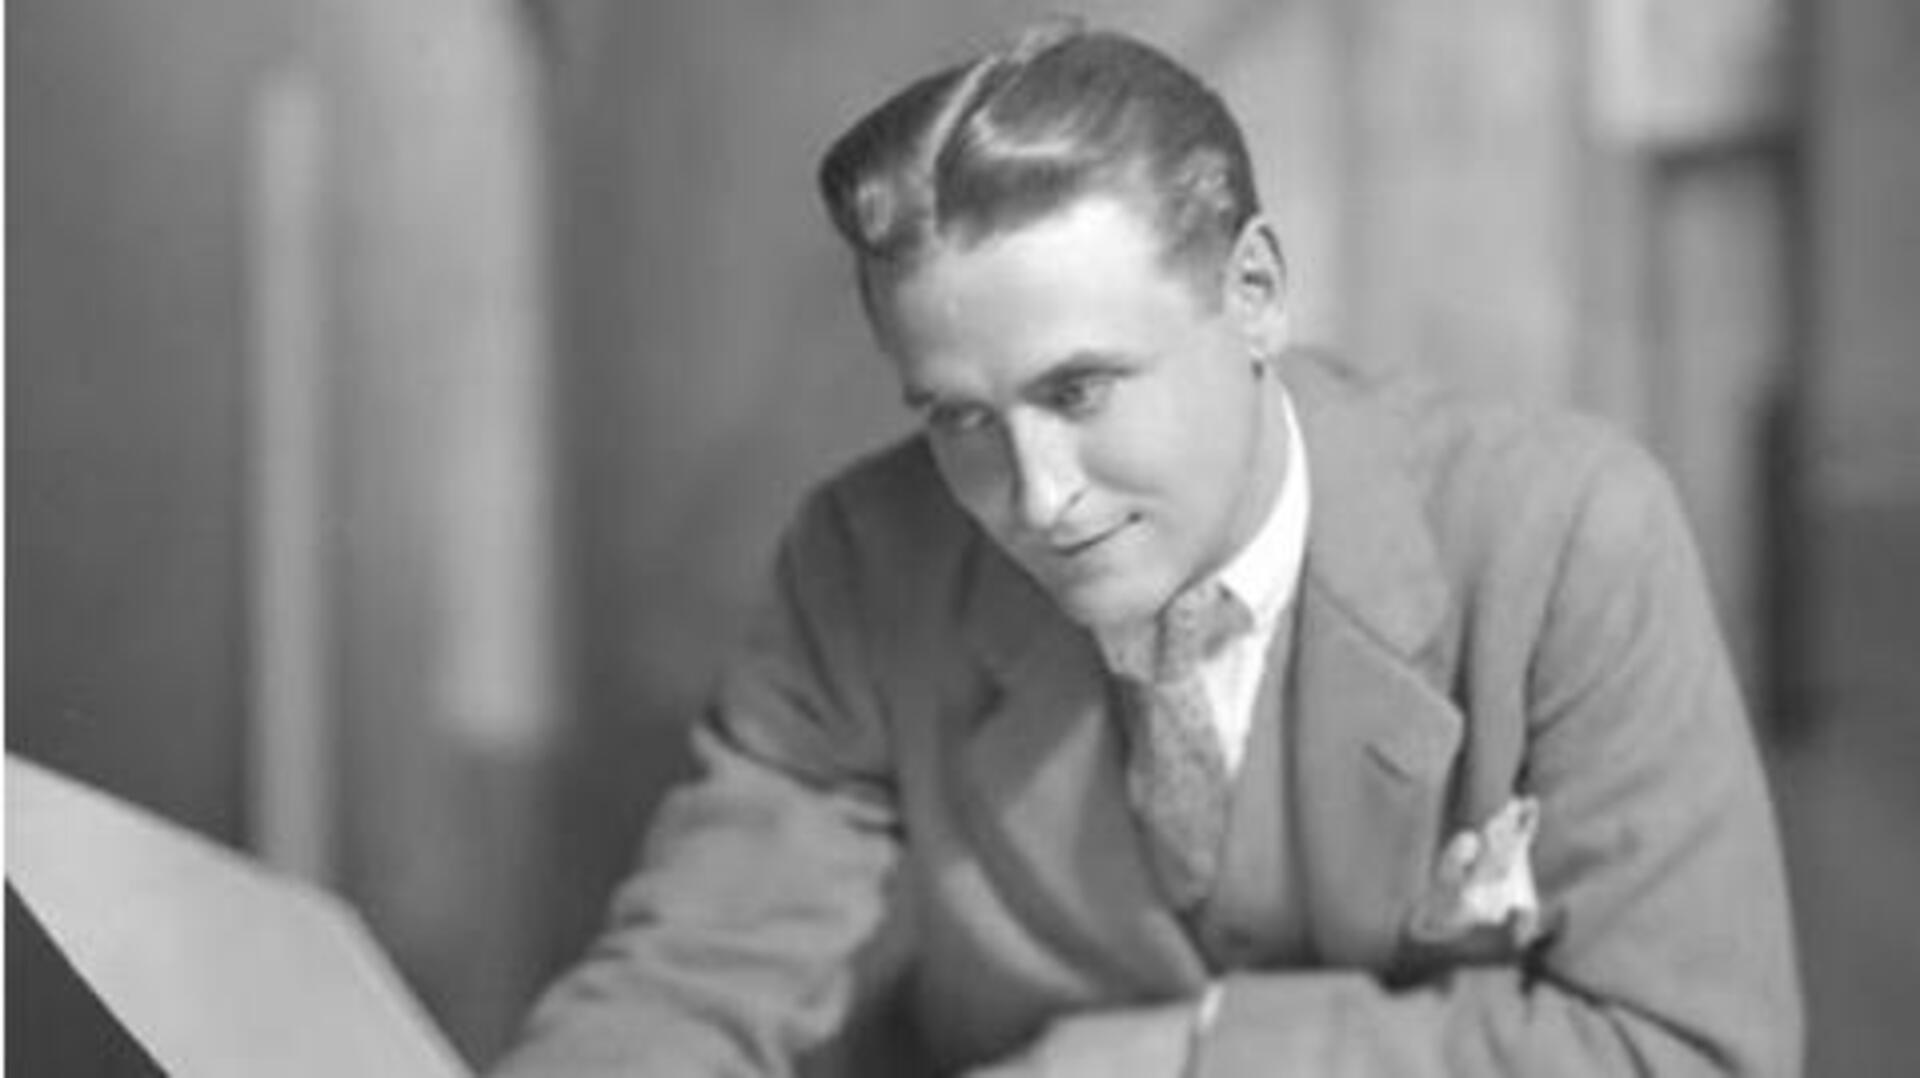 Revisiting F. Scott Fitzgerald's top books on his birth anniversary